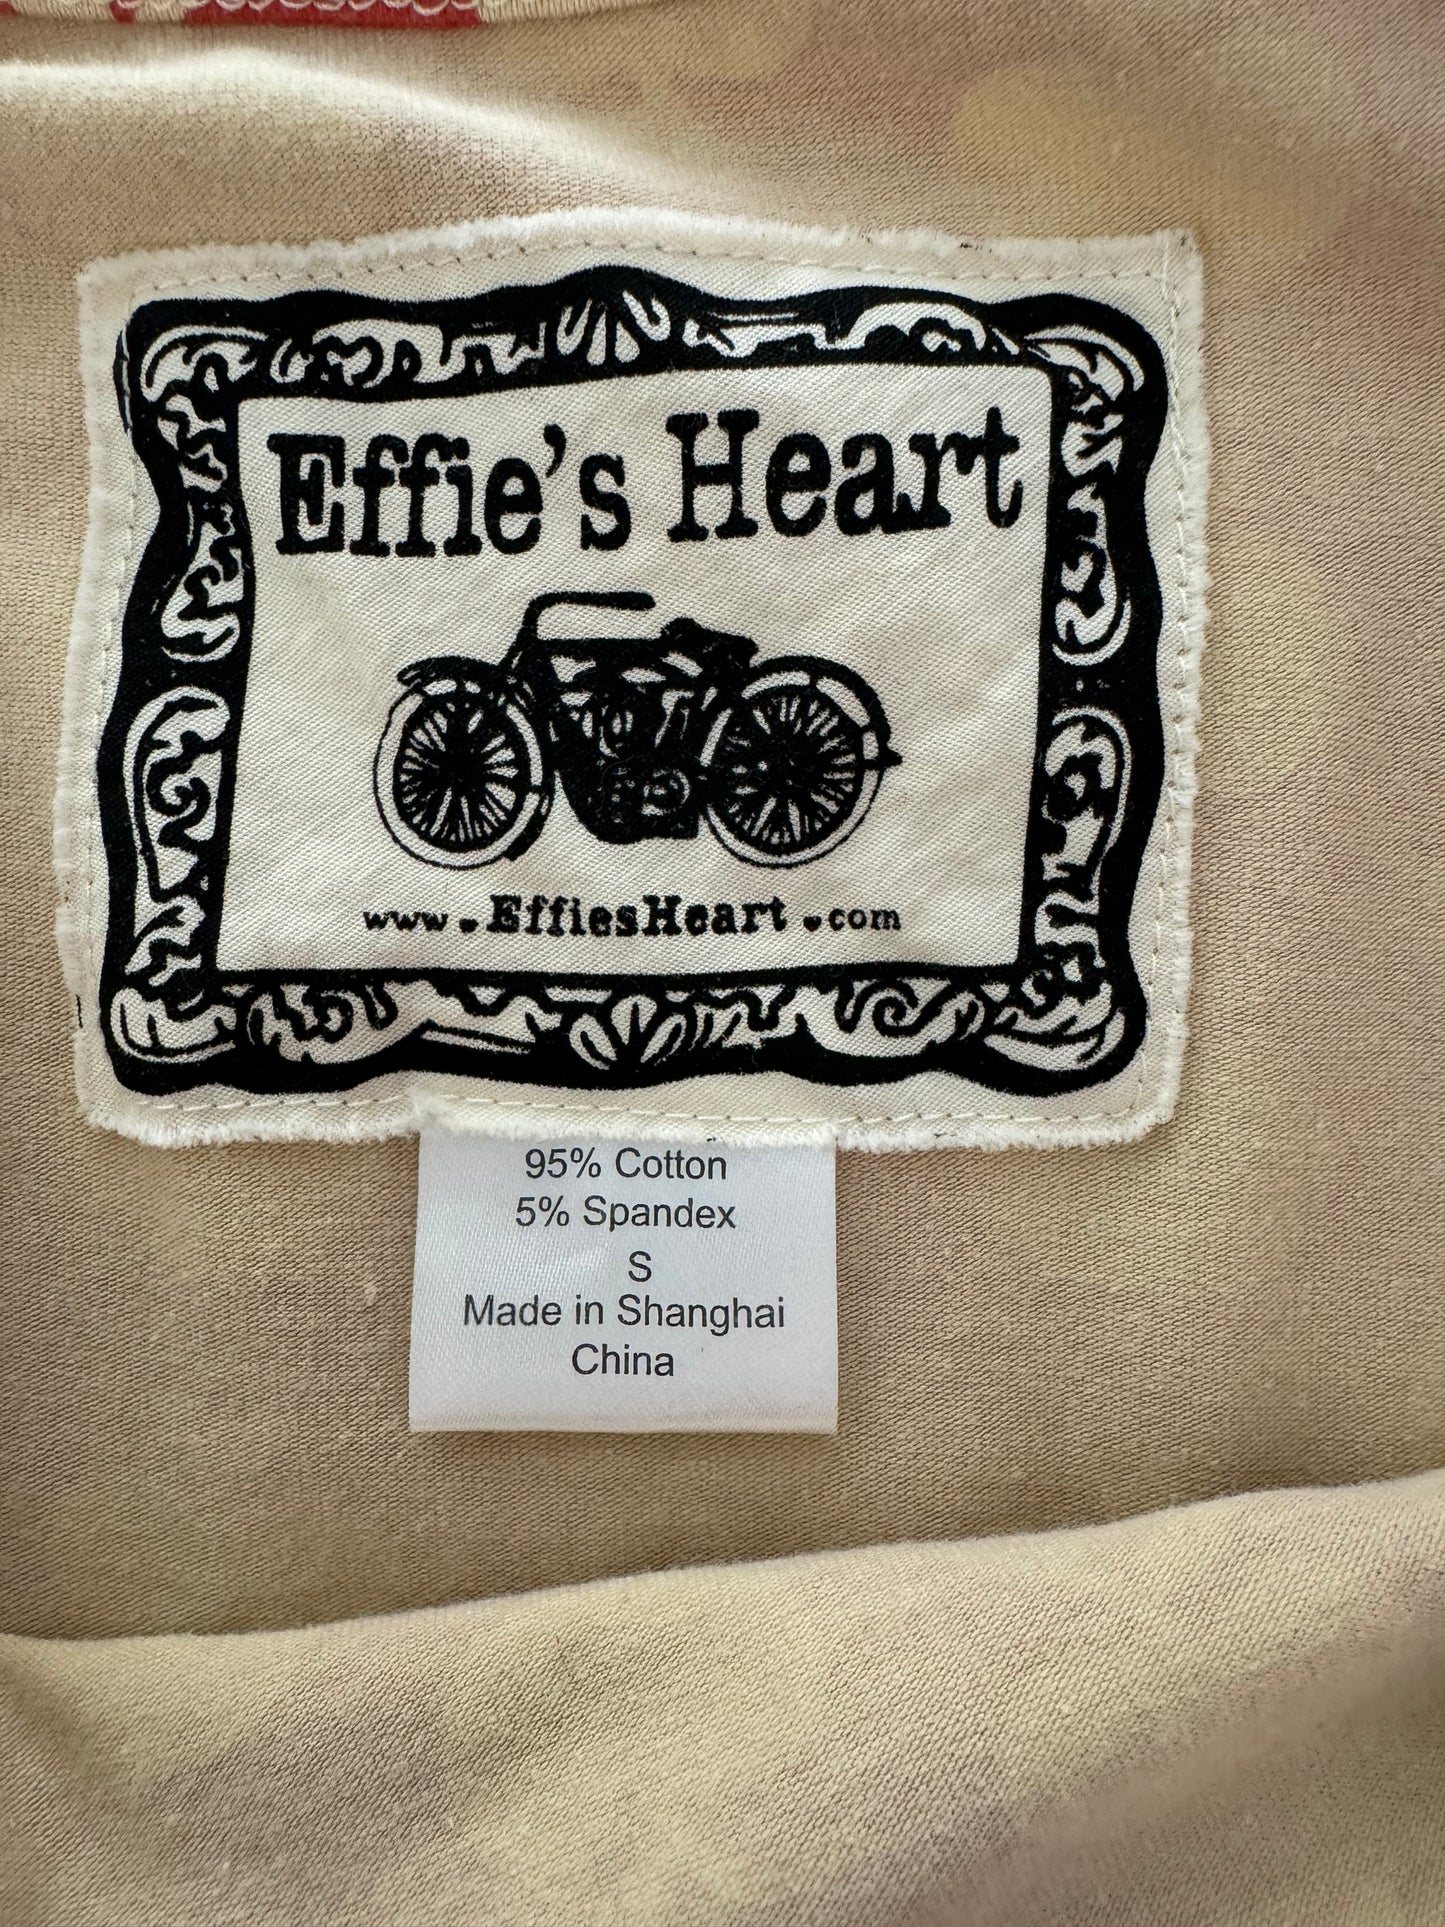 Effie's Heart